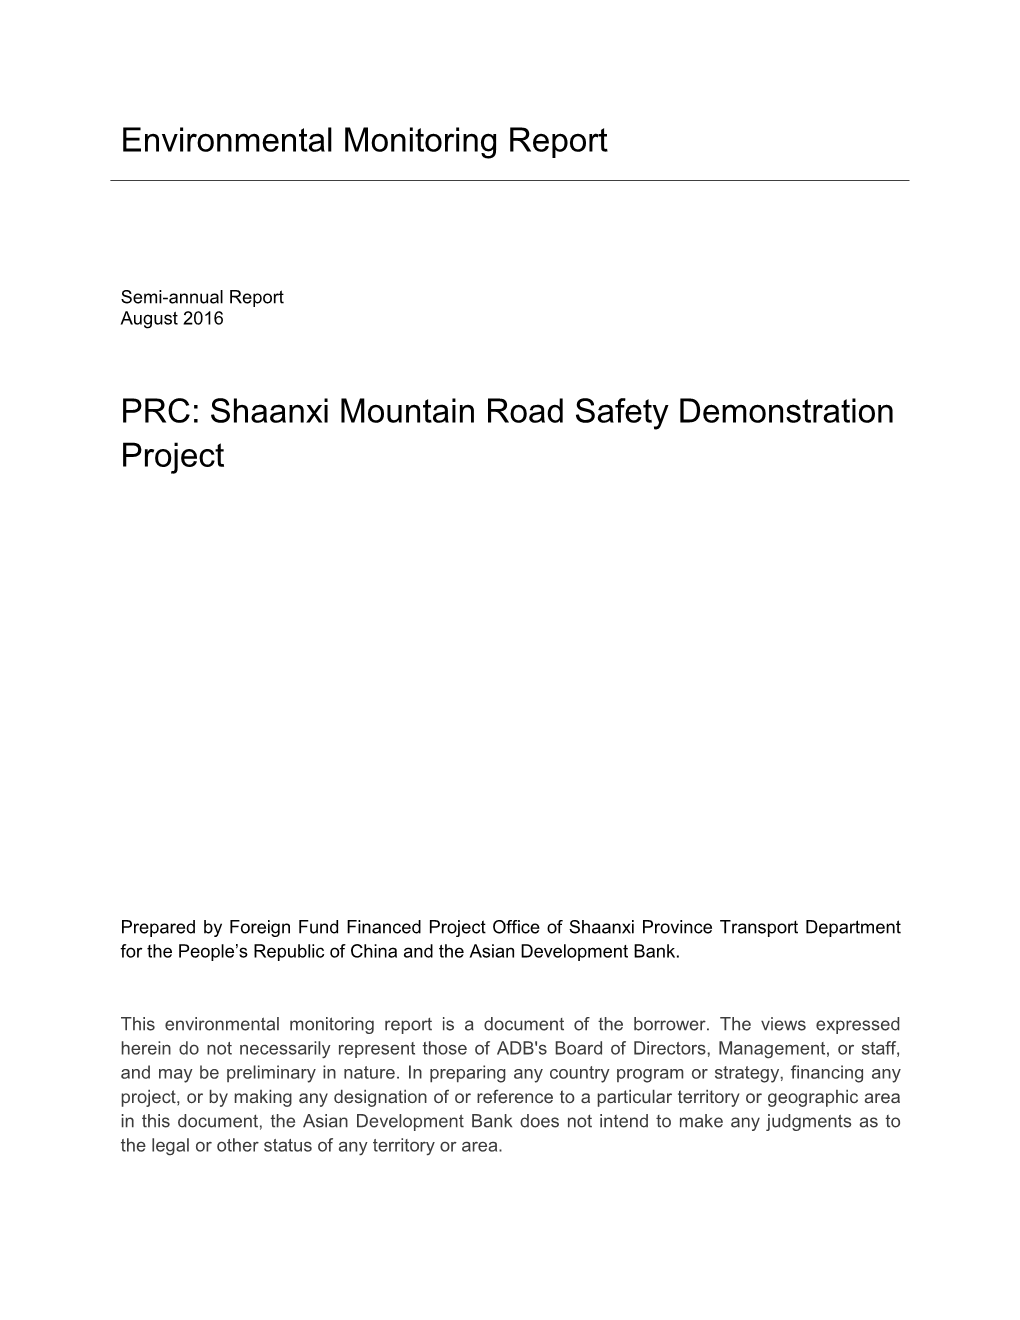 Environmental Monitoring Report PRC: Shaanxi Mountain Road Safety